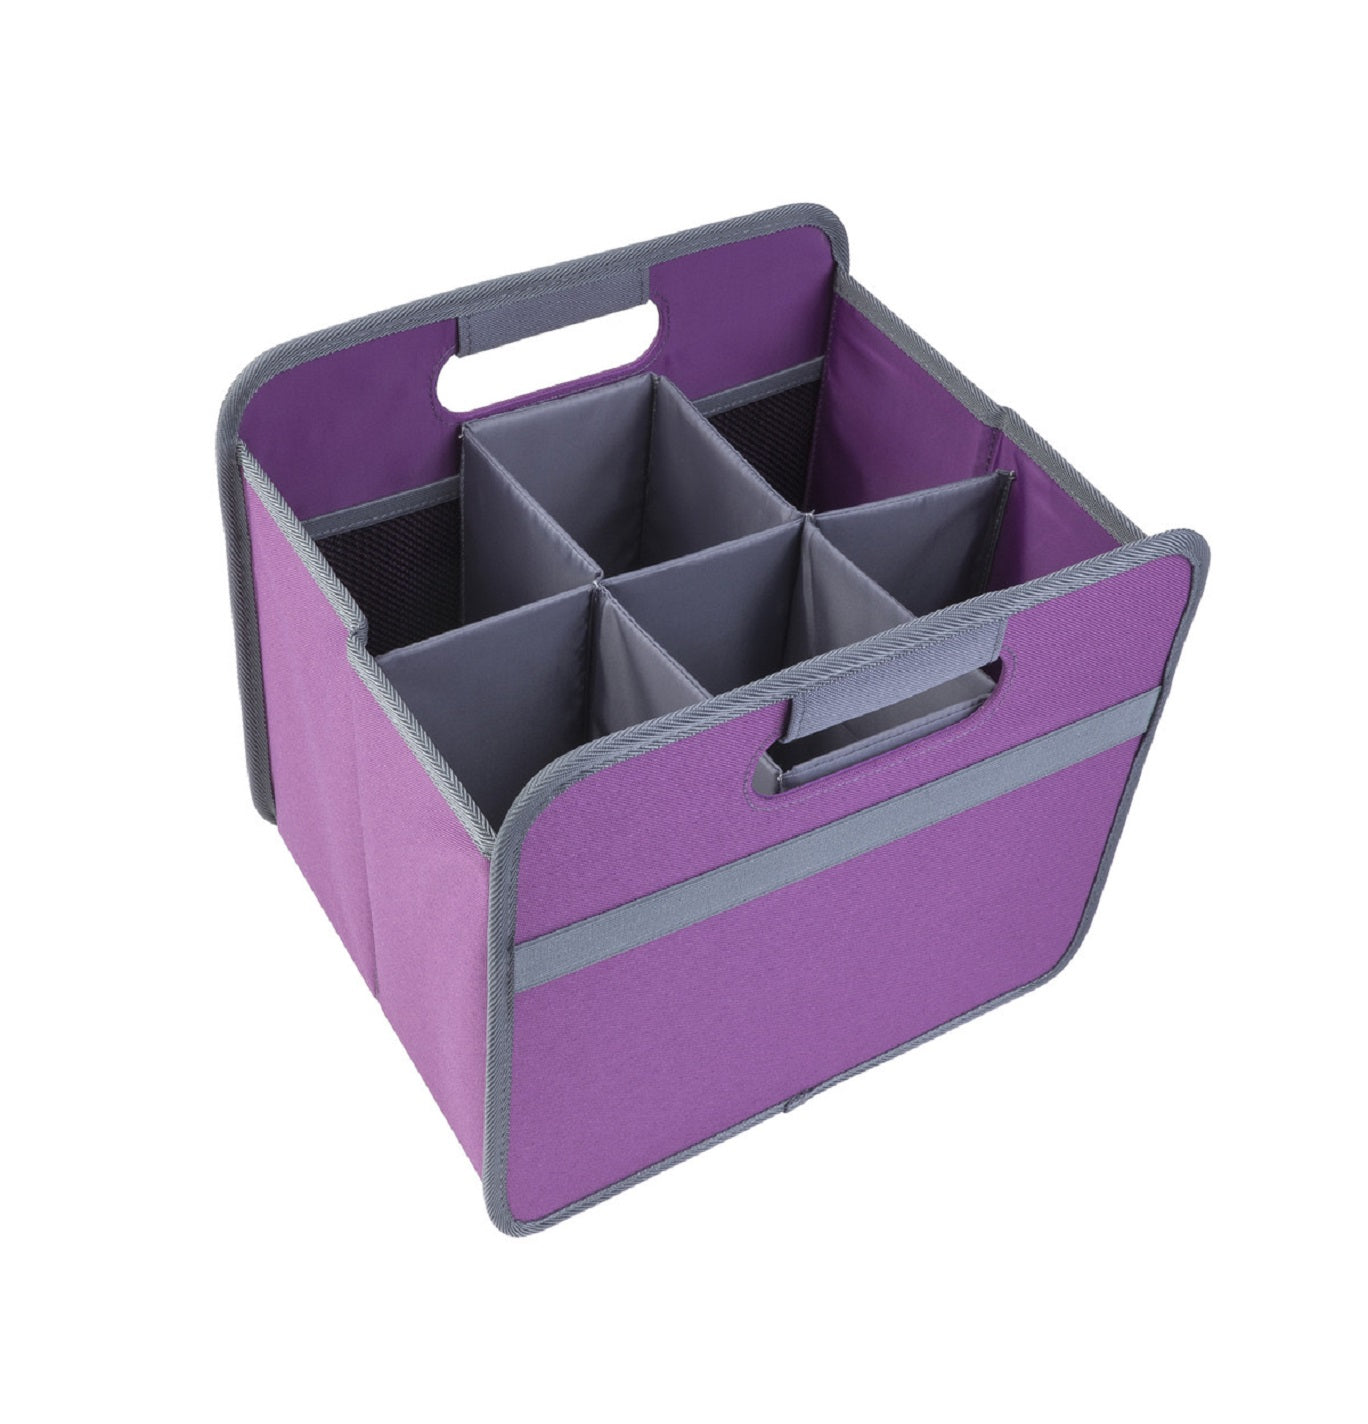 Meori® Small 15L Green Outdoor Foldable Storage Box Image